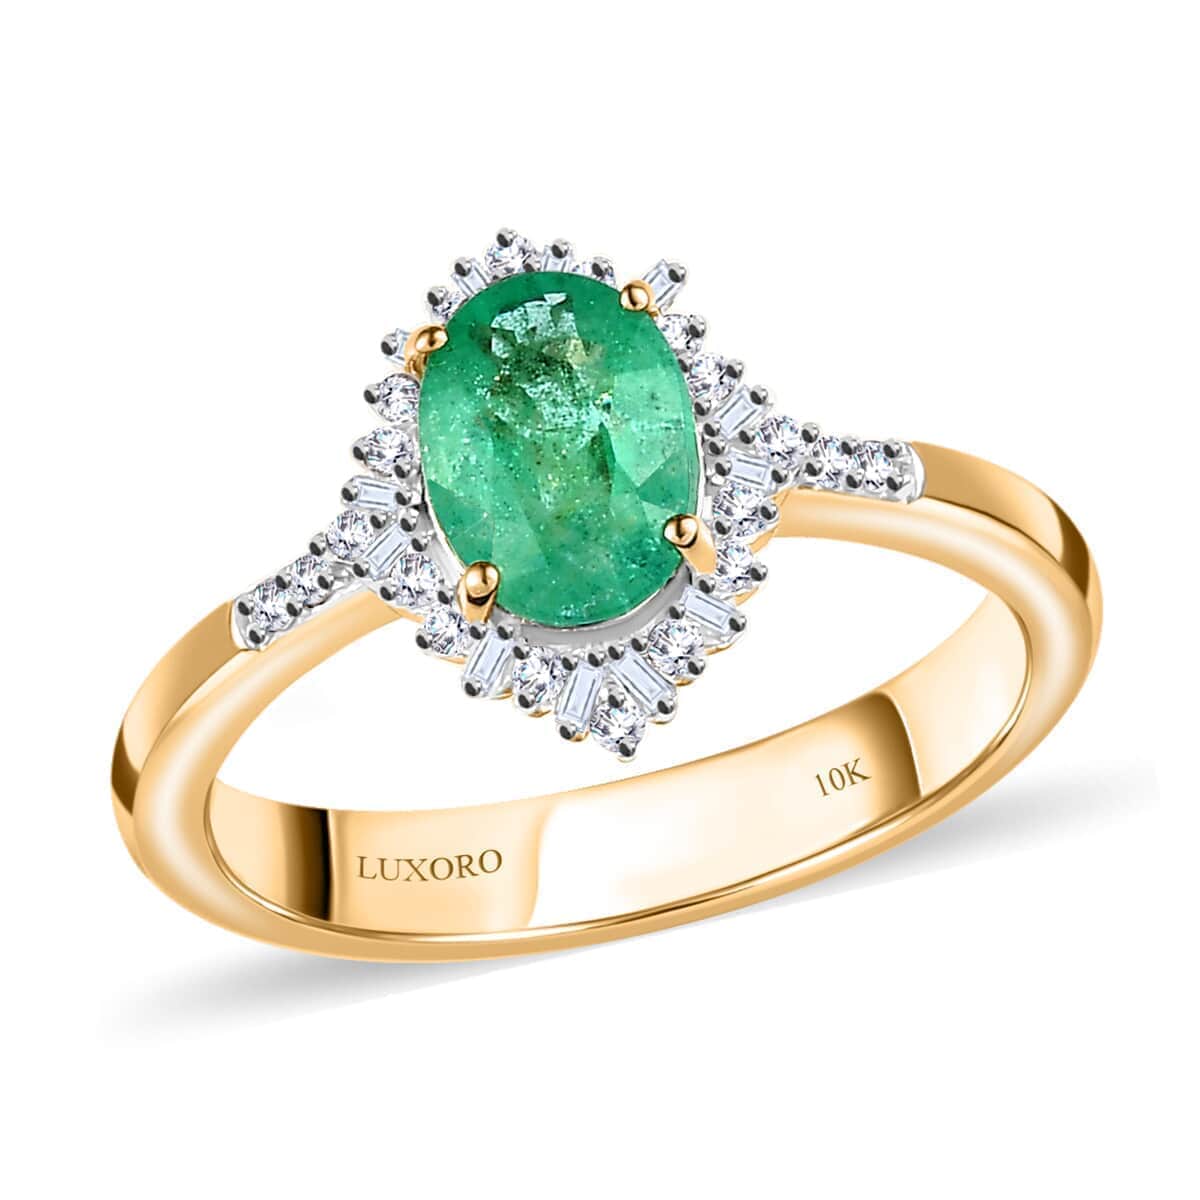 Luxoro 10K Yellow Gold Premium Ethiopian Emerald and G-H I3 Diamond Halo Ring (Size 10.0) 1.40 ctw image number 0